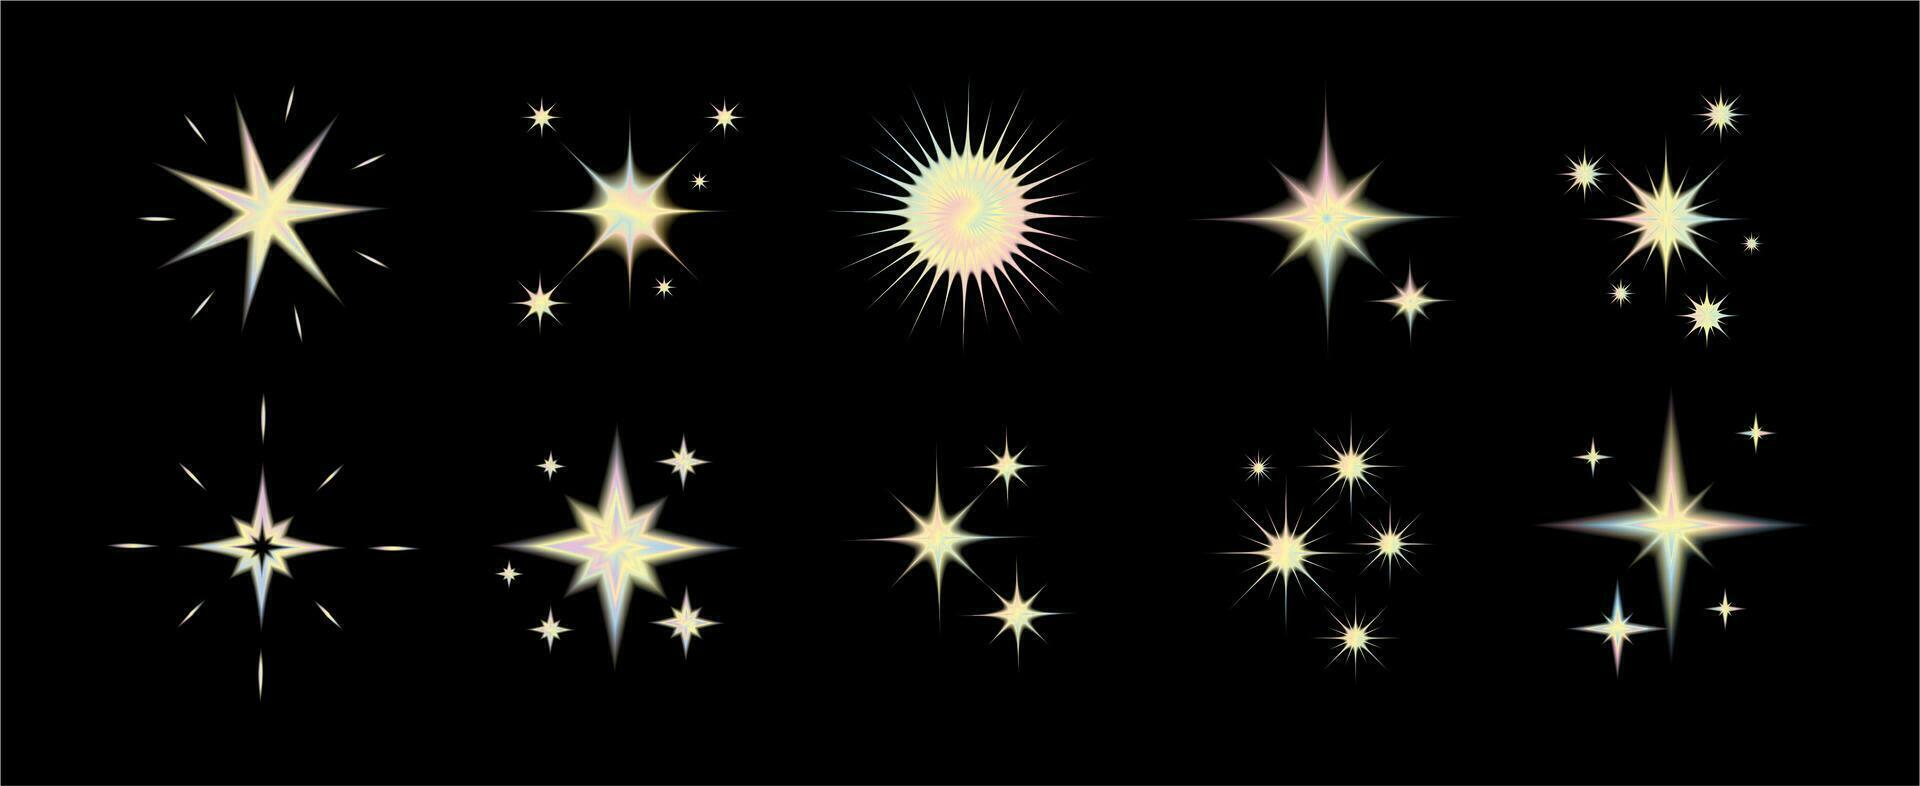 ano 2000 estilo formas borrado gradiente definir. aura estético elementos estrela, Sol. vetor ilustração